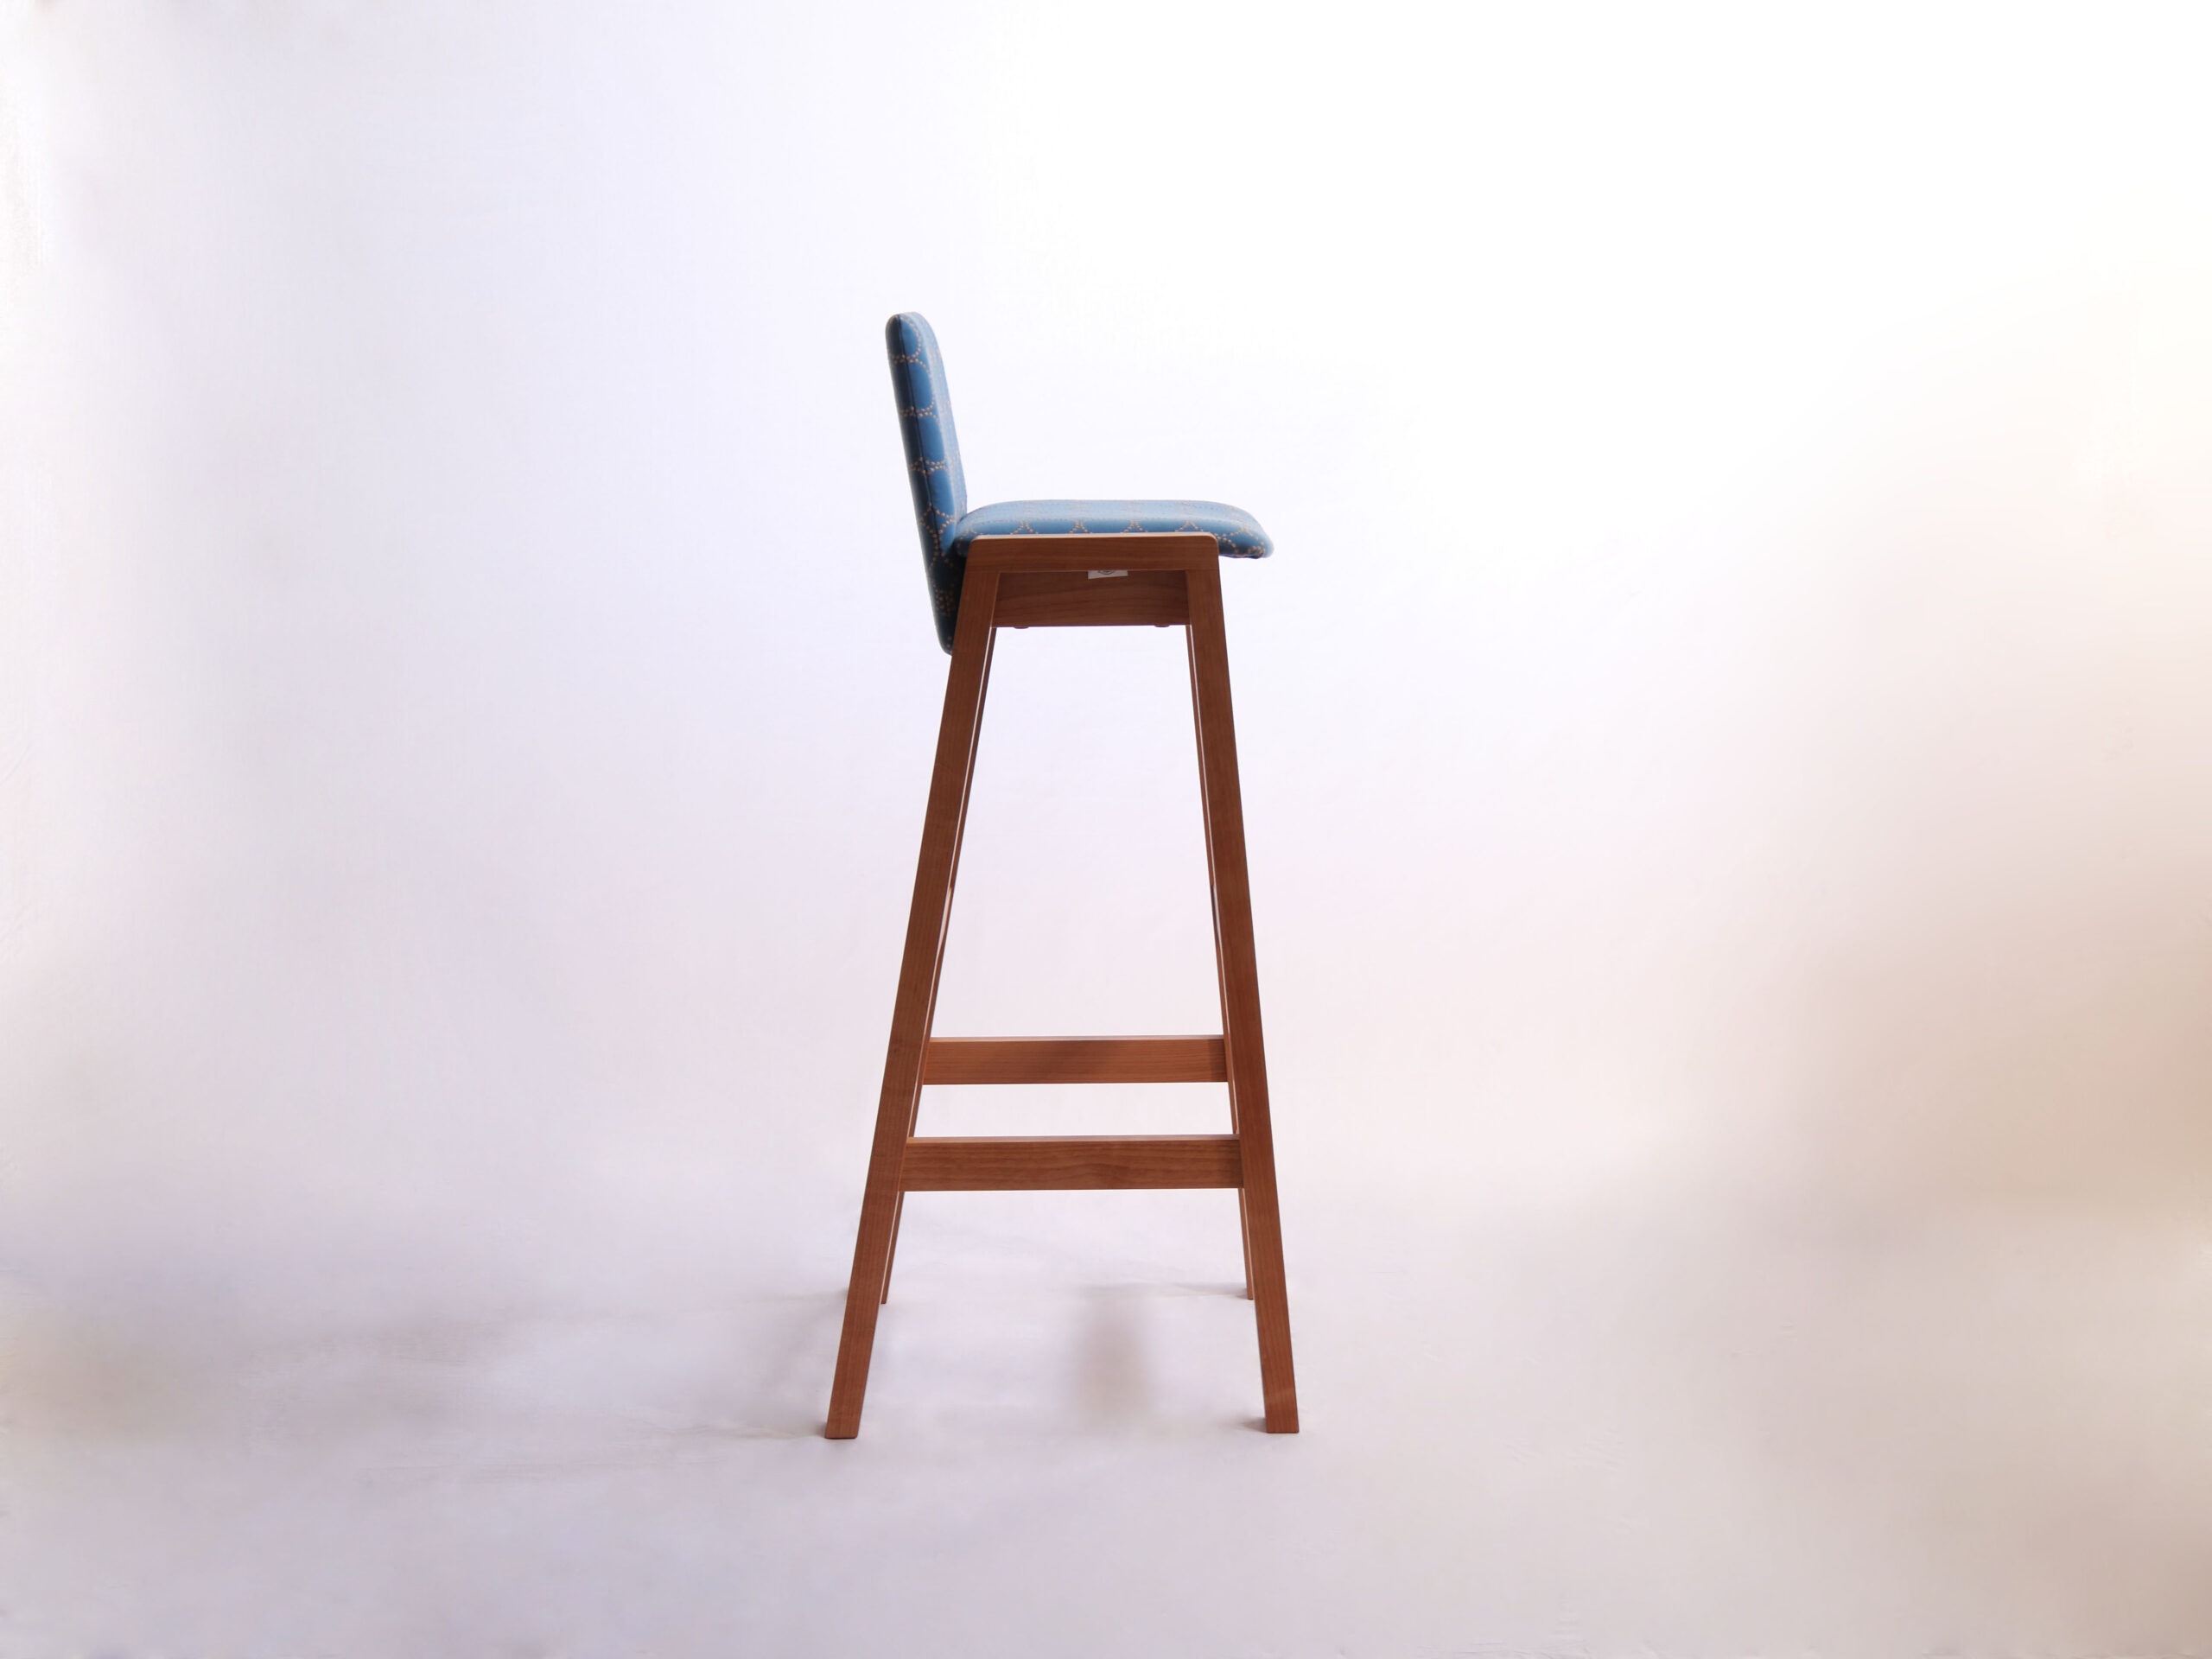 The highest stool